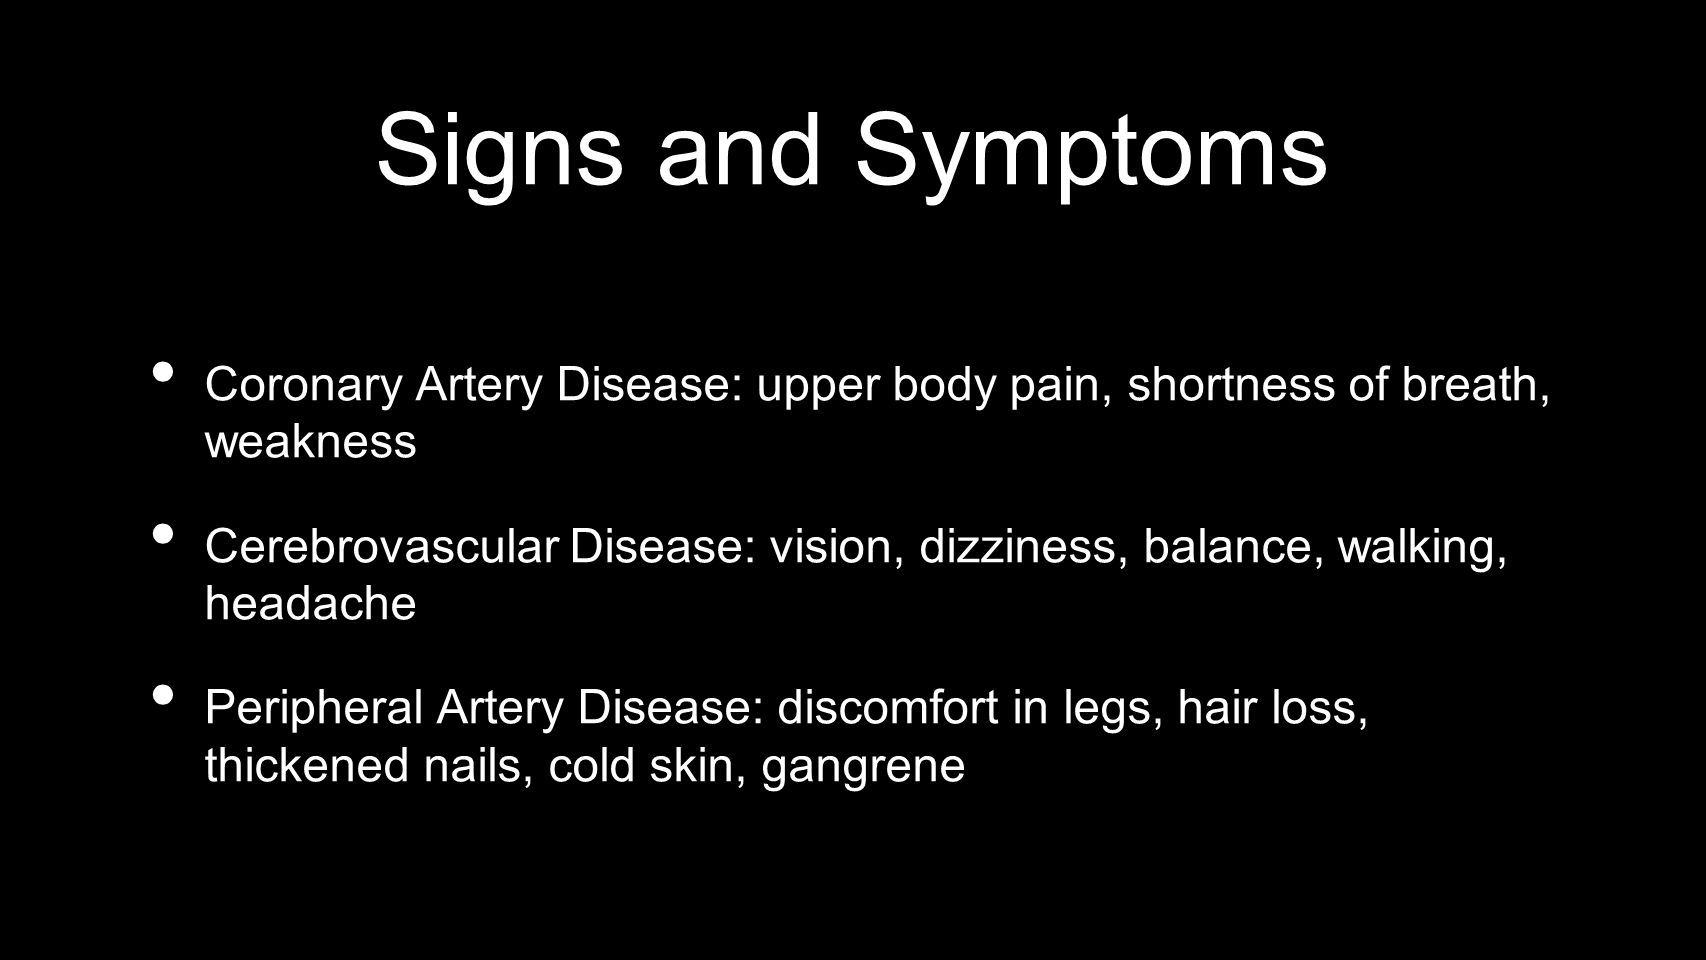 Signs and Symptoms Coronary Artery Disease: upper body pain, shortness of breath, weakness.